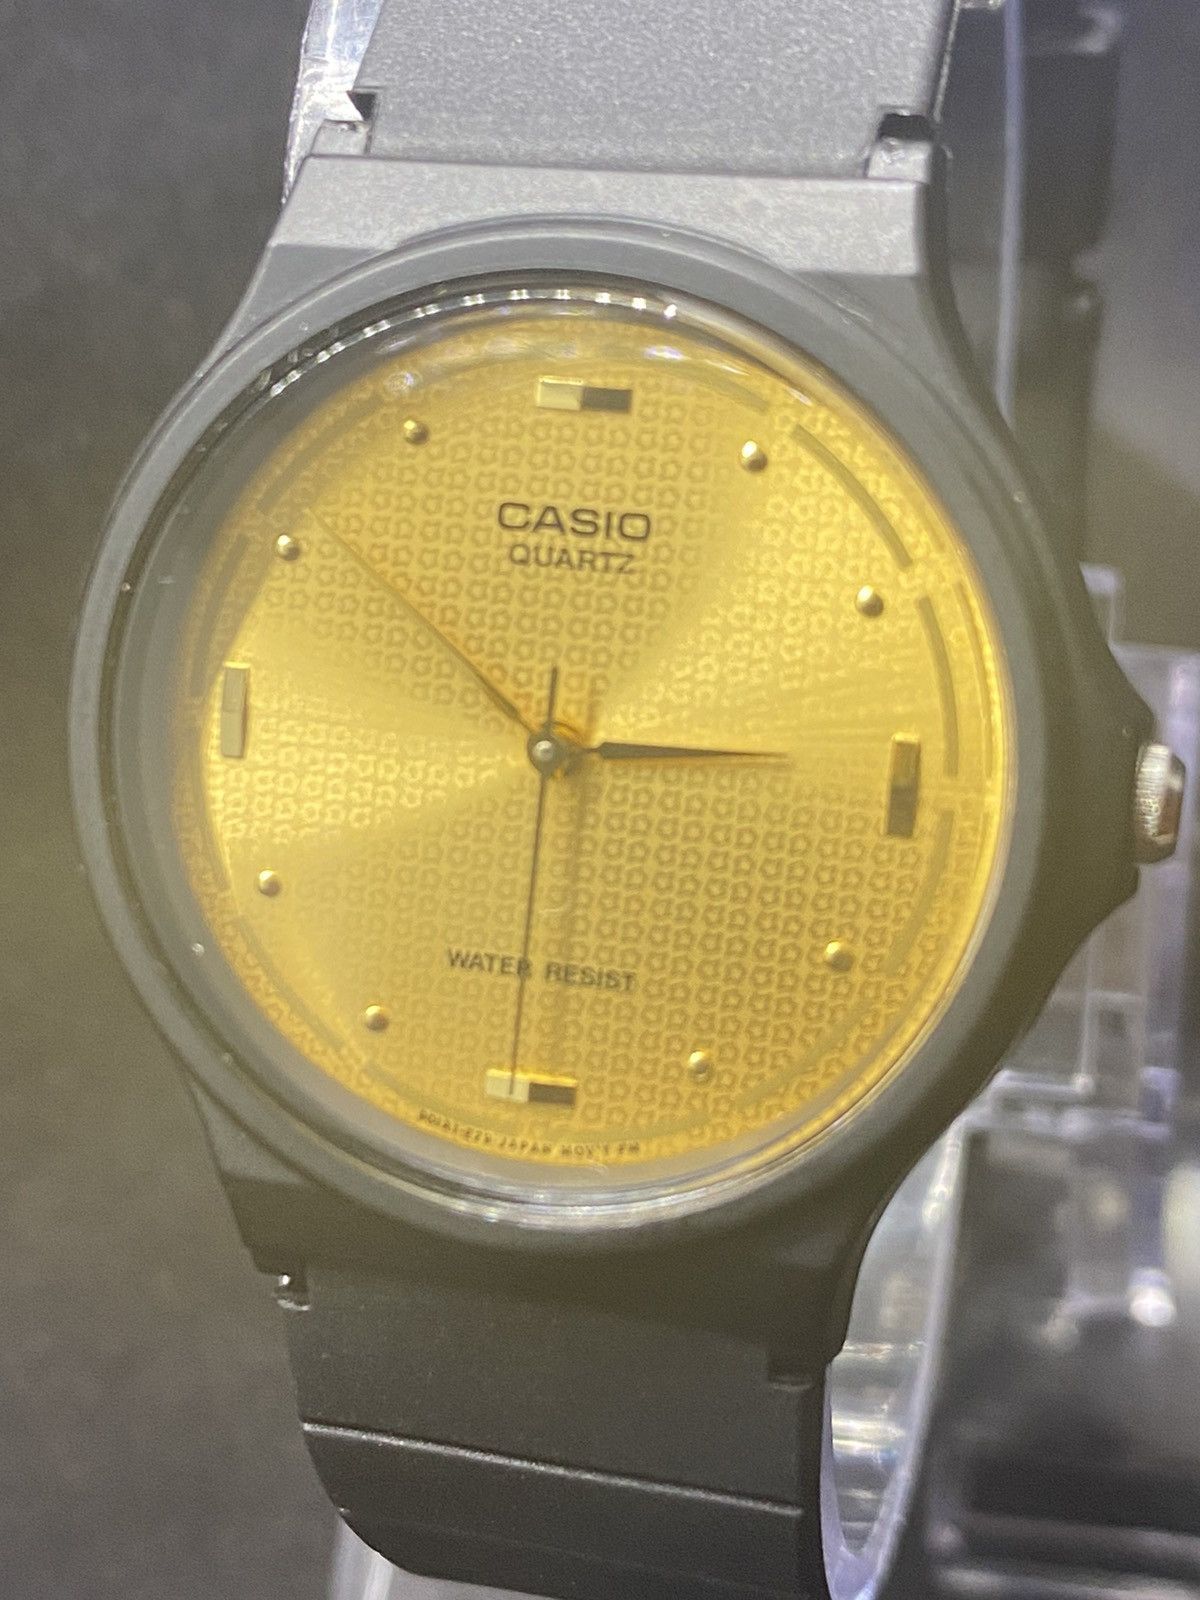 Casio Casio Watch UNISEX Size in wrist 36mm Diameter Rubber Band Size 36 - 3 Thumbnail